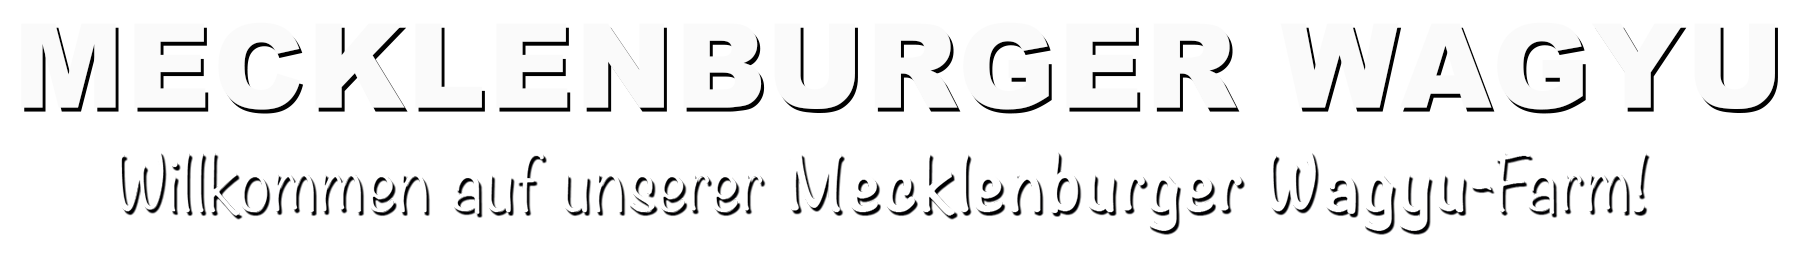 Mecklenburger-Wagyu_home_2